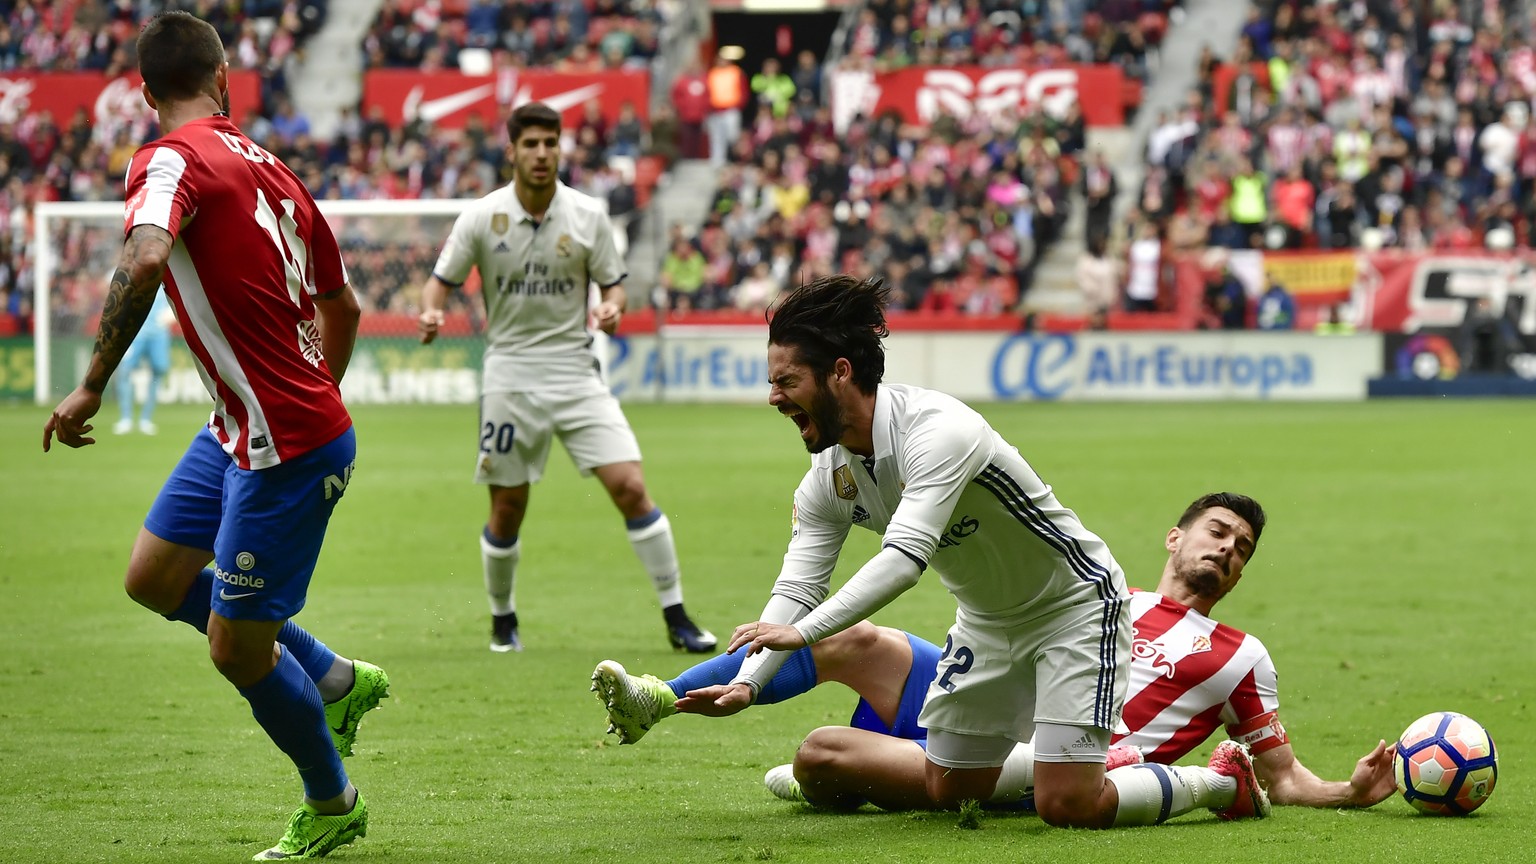 Real Madrid&#039;s Isco, is tackled by Sporting de Gijon&#039;s Sergio Alvarez during the Spanish La Liga soccer match between Real Madrid and Sporting de Gijon, at El Molinon stadium in Gijon, northe ...